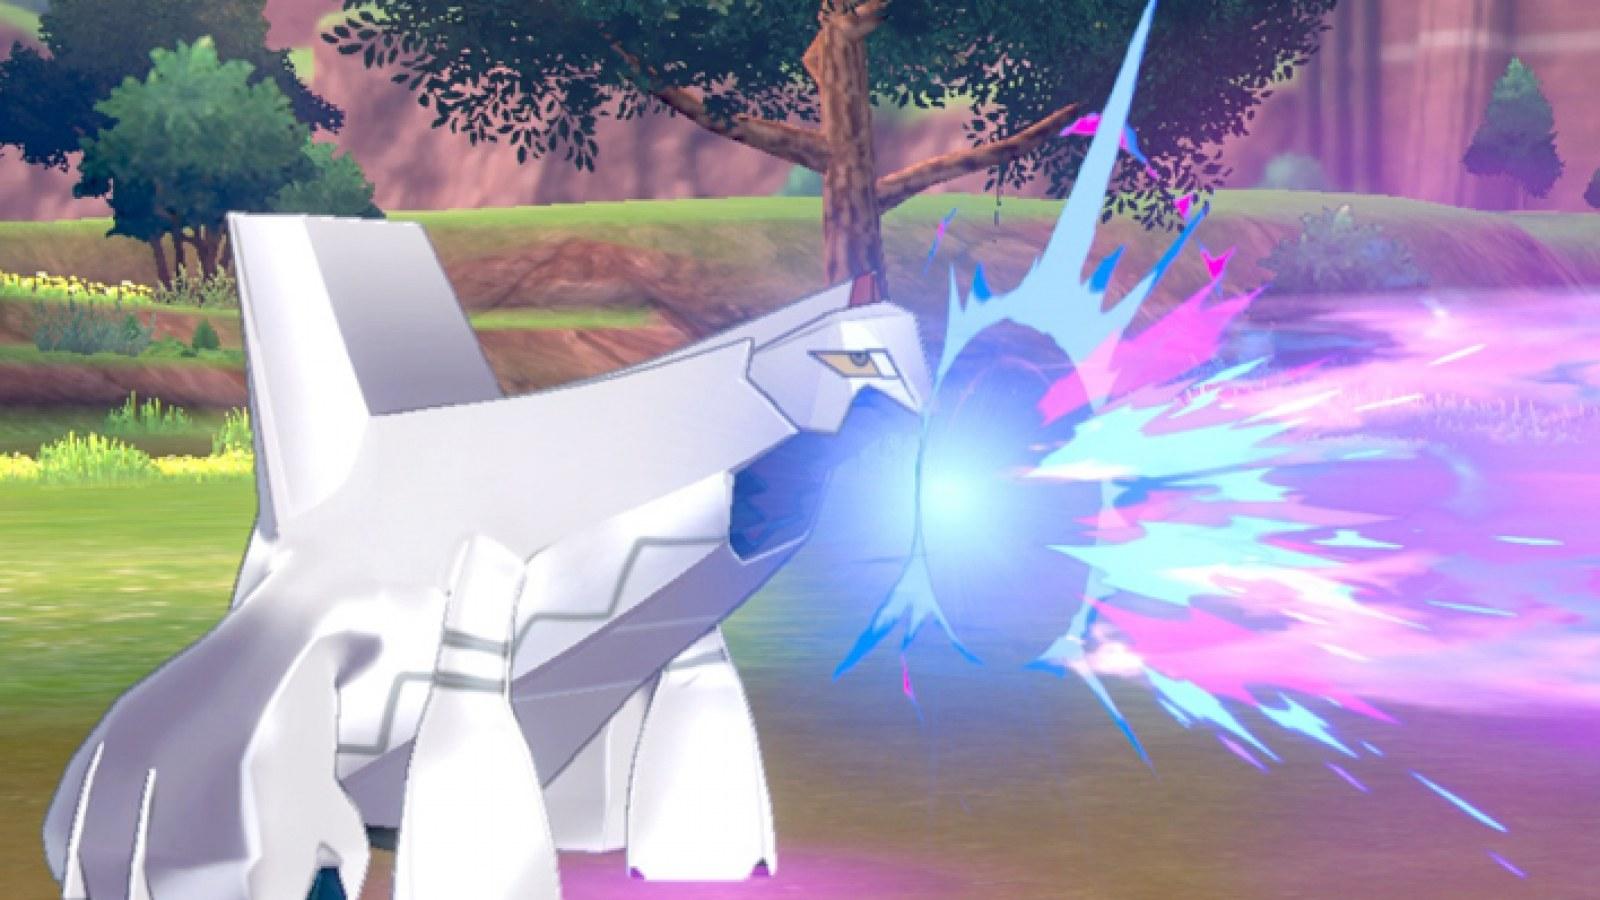 Pokémon Sword and Shield' CoroCoro Leak Reveals Name of New Attack